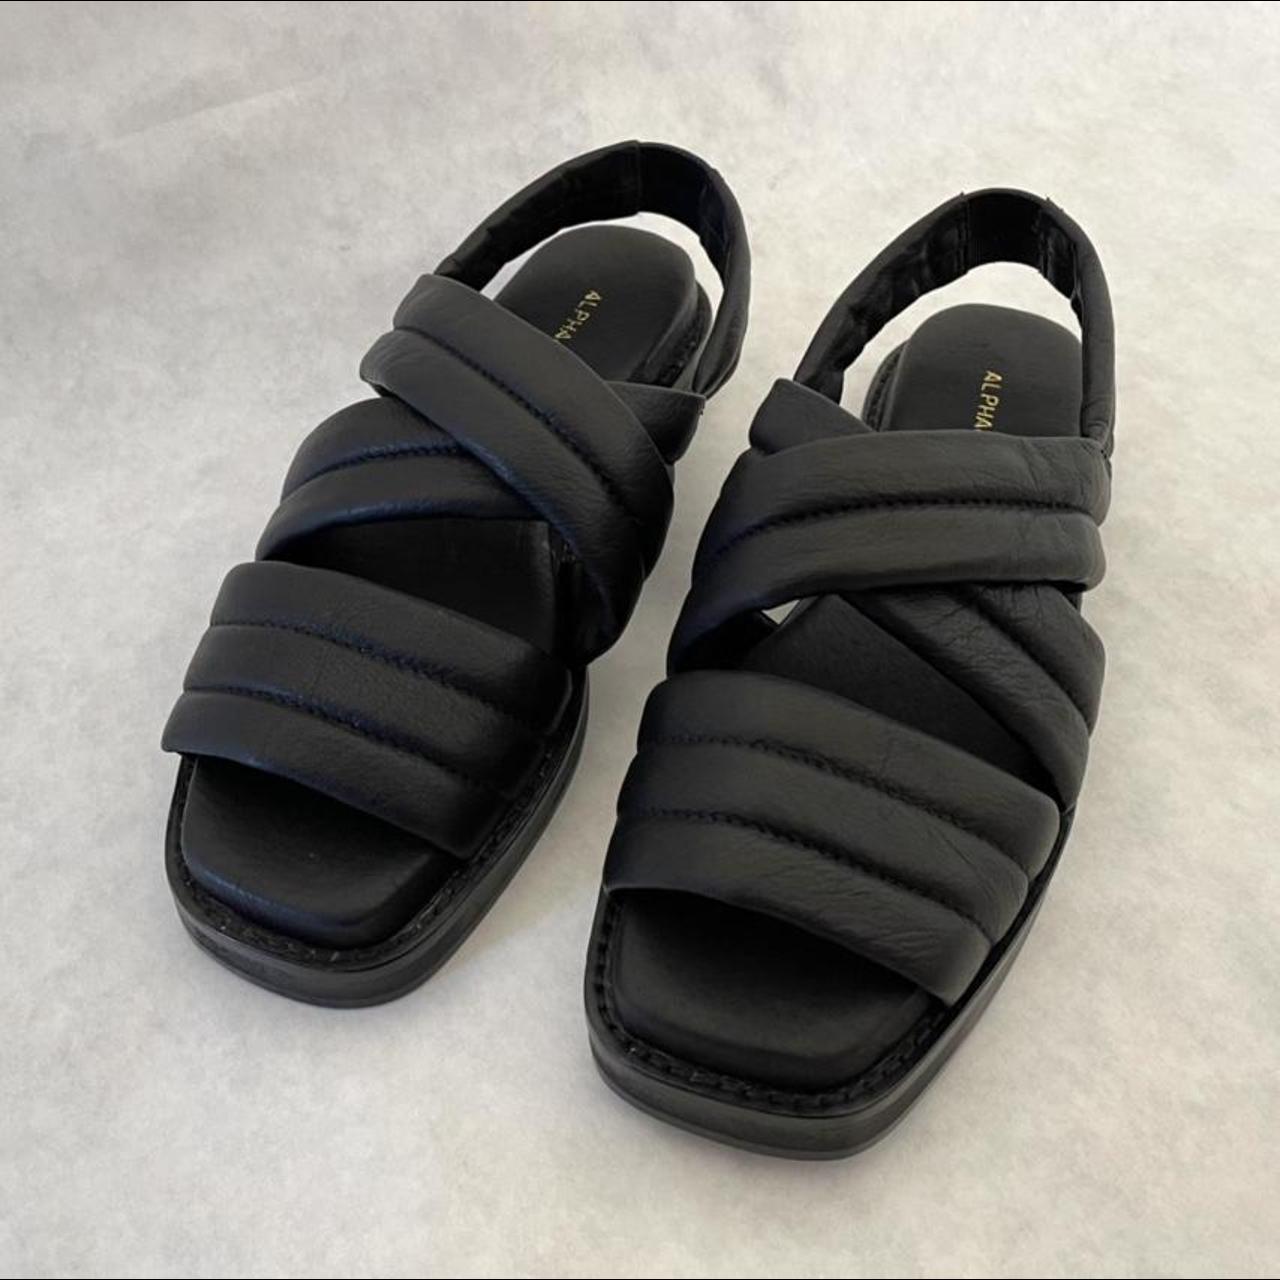 Product Image 1 - ALPHA60 Black leather sandals (Brand